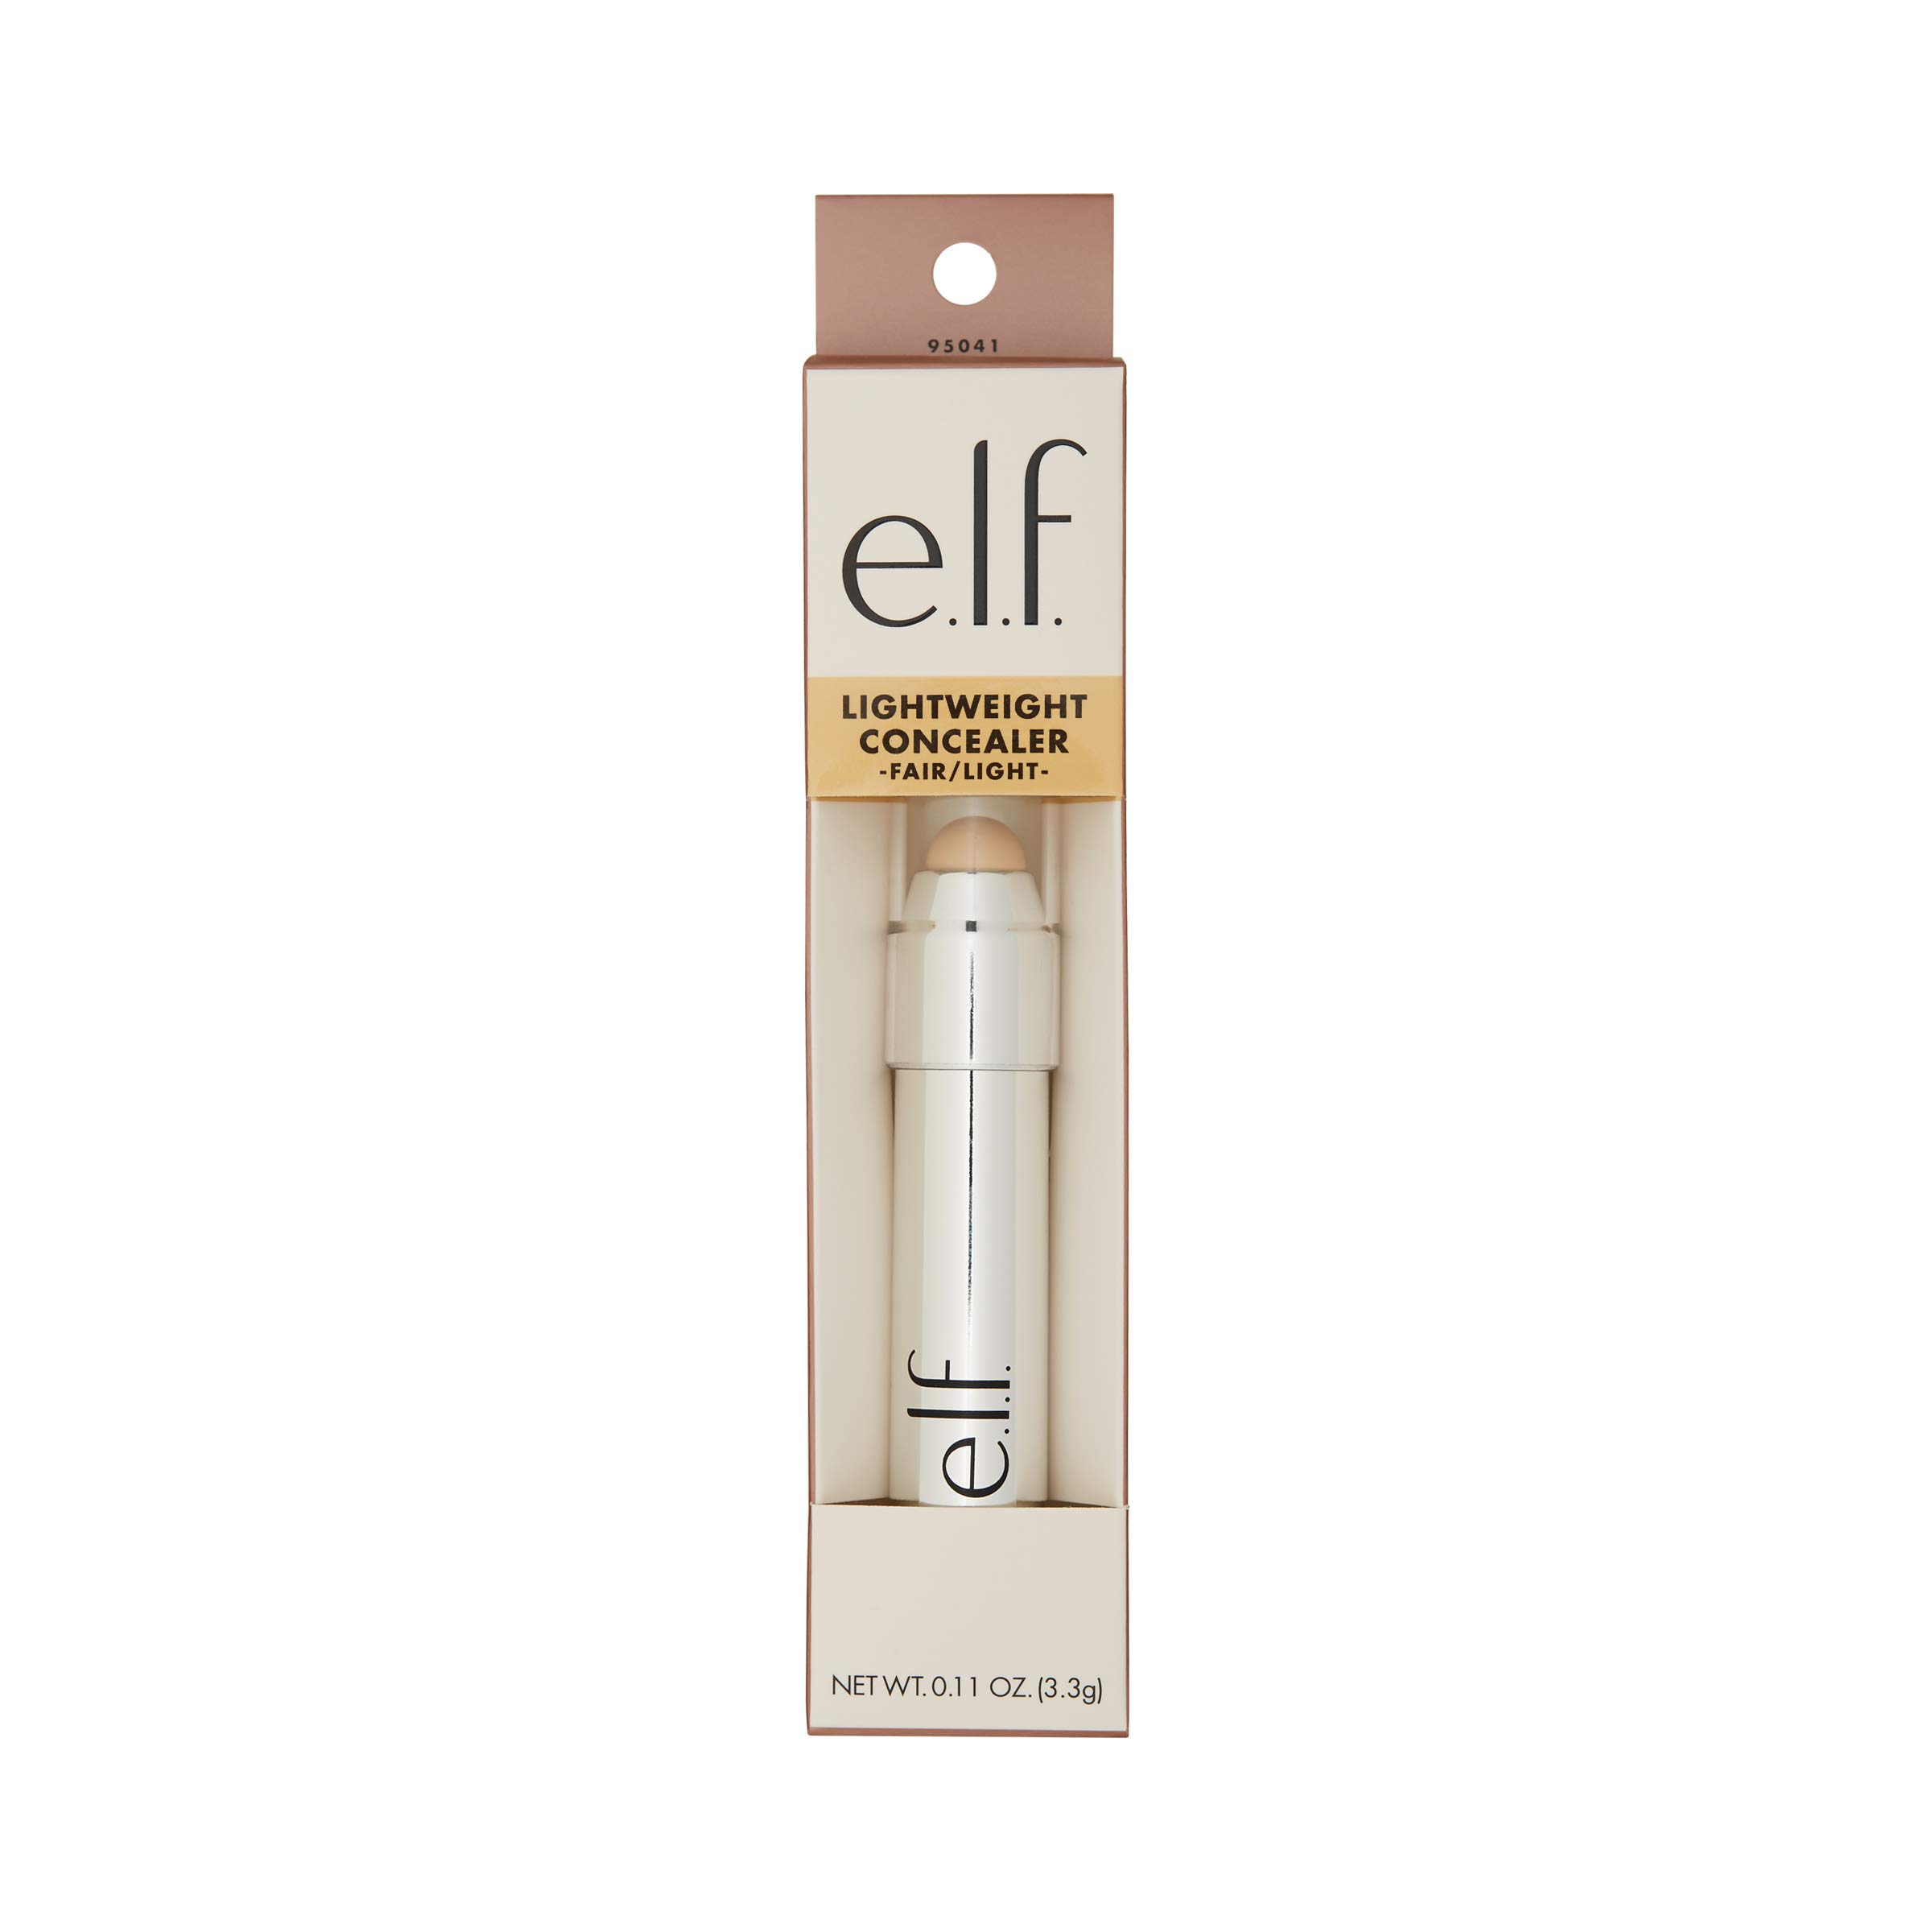 E.L.F. Cosmetics Beautifully Bare Lightweight Concealer Stick 95041 Fair/Light, 0.6 Ounce